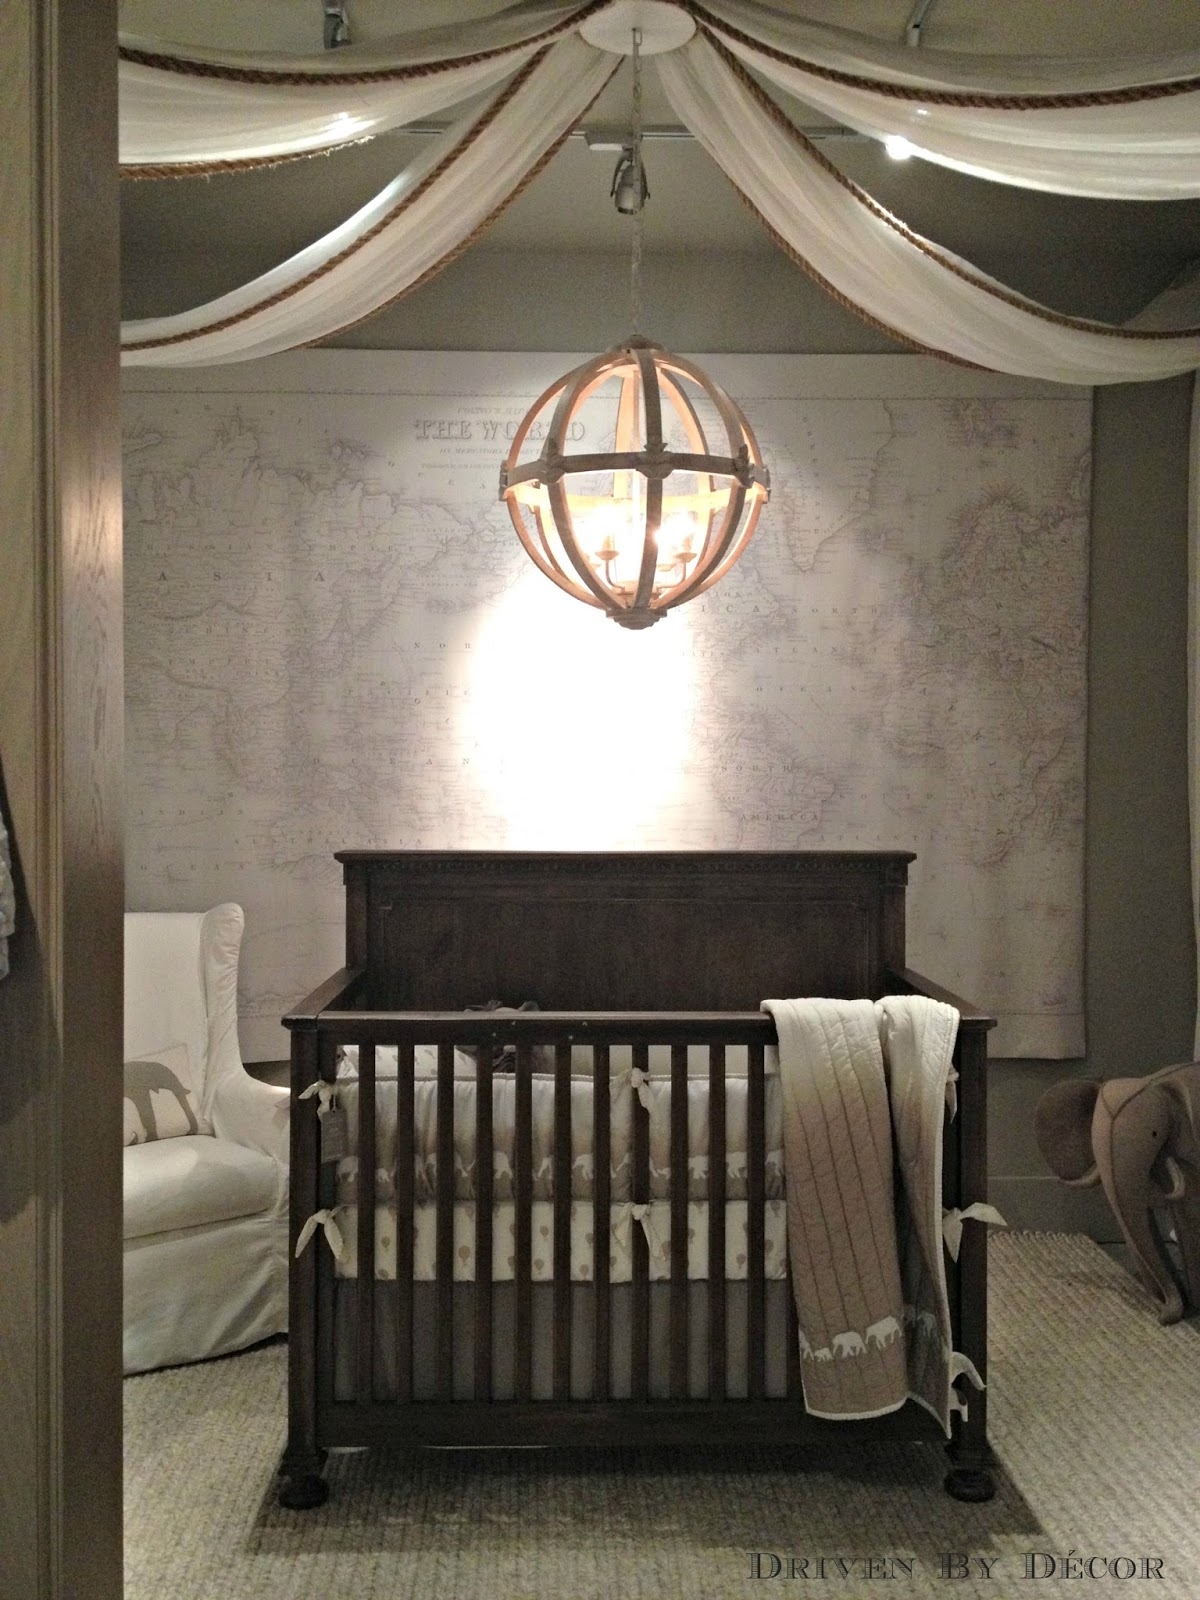 Ceiling Lights For Baby Boy Nurserydecorating nurseries kids rooms inspiration from rh ba